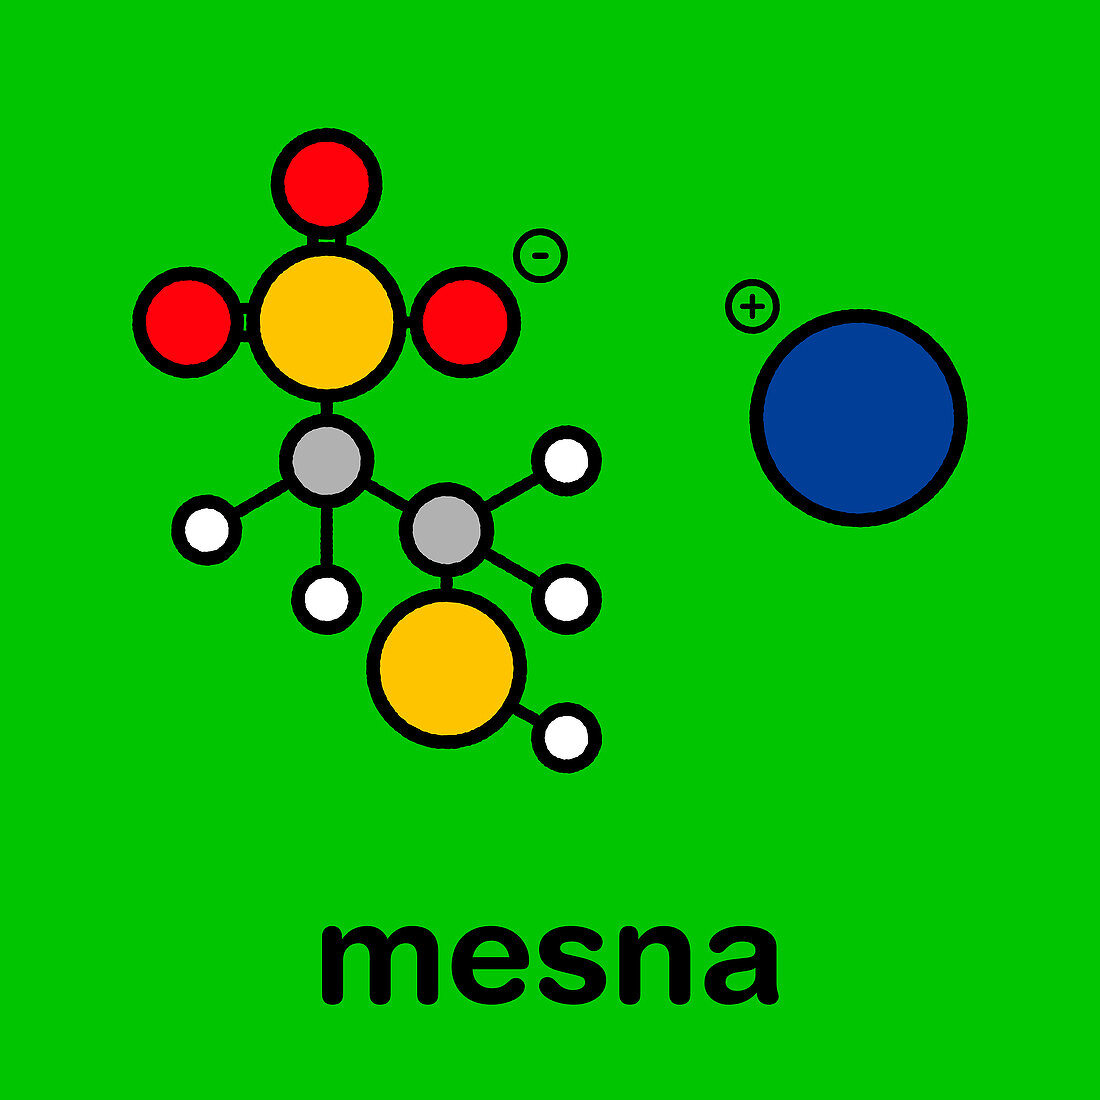 Mesna chemotherapy adjuvant and mucolytic drug molecule